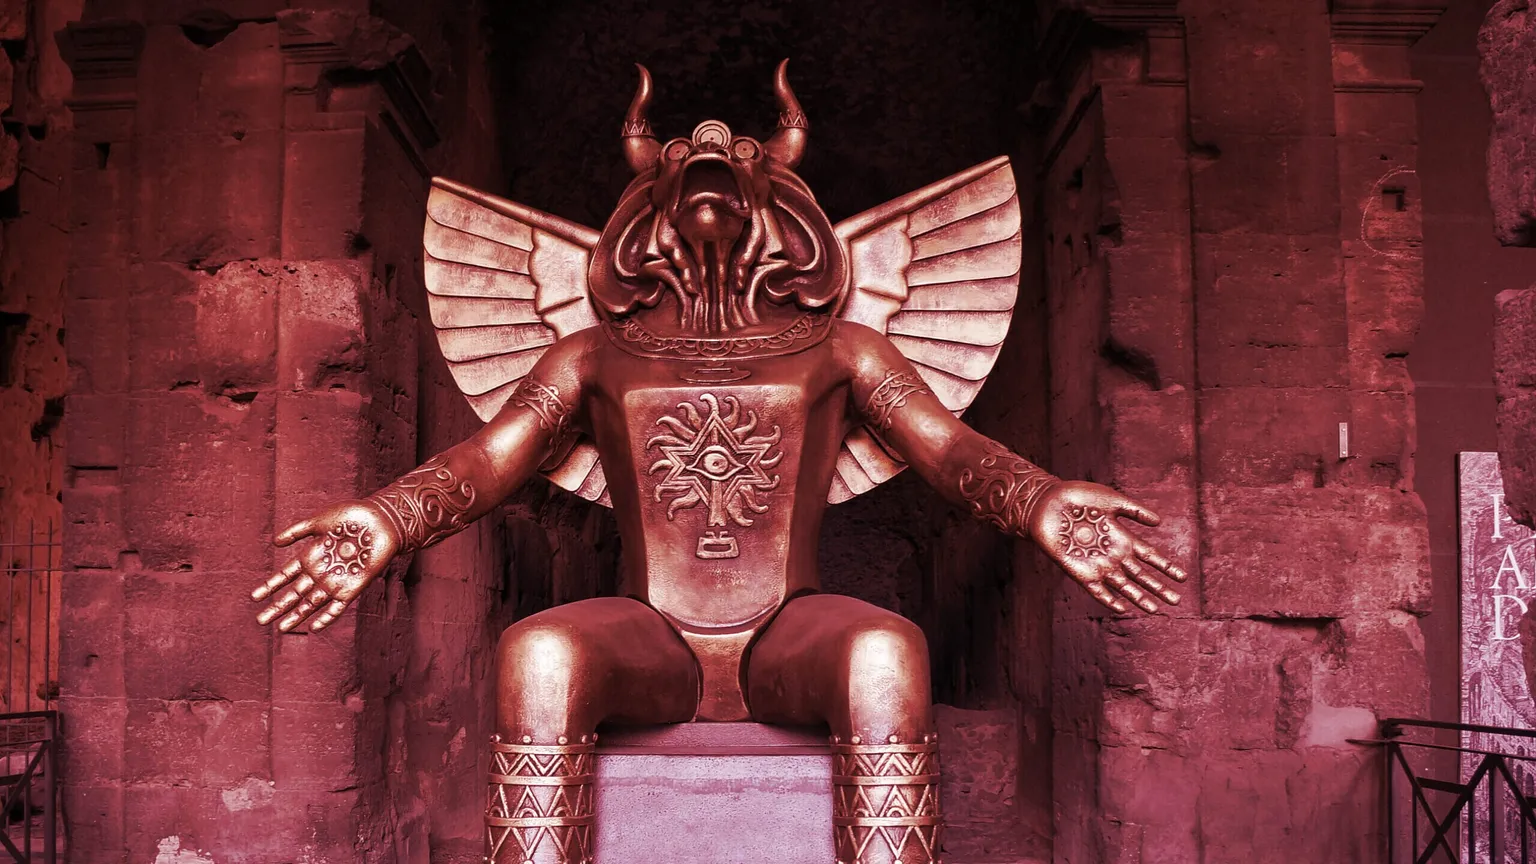 Moloch statue in the Coliseum in Rome, Italy. (Shutterstock)